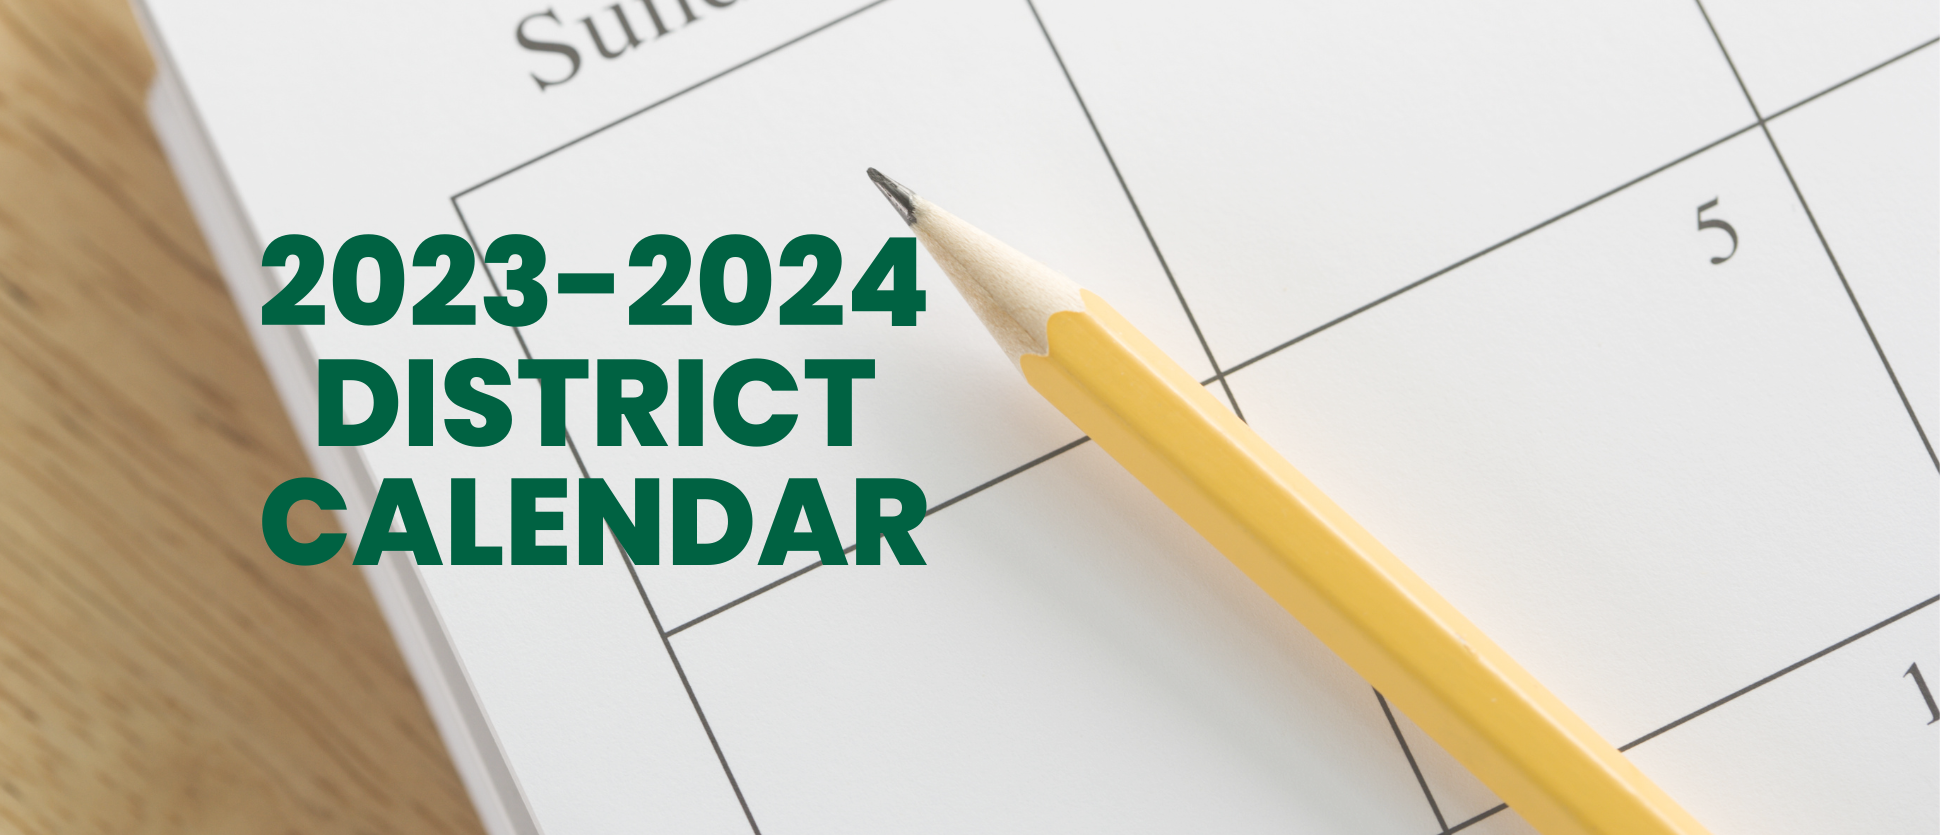 2023-2024 district calendar